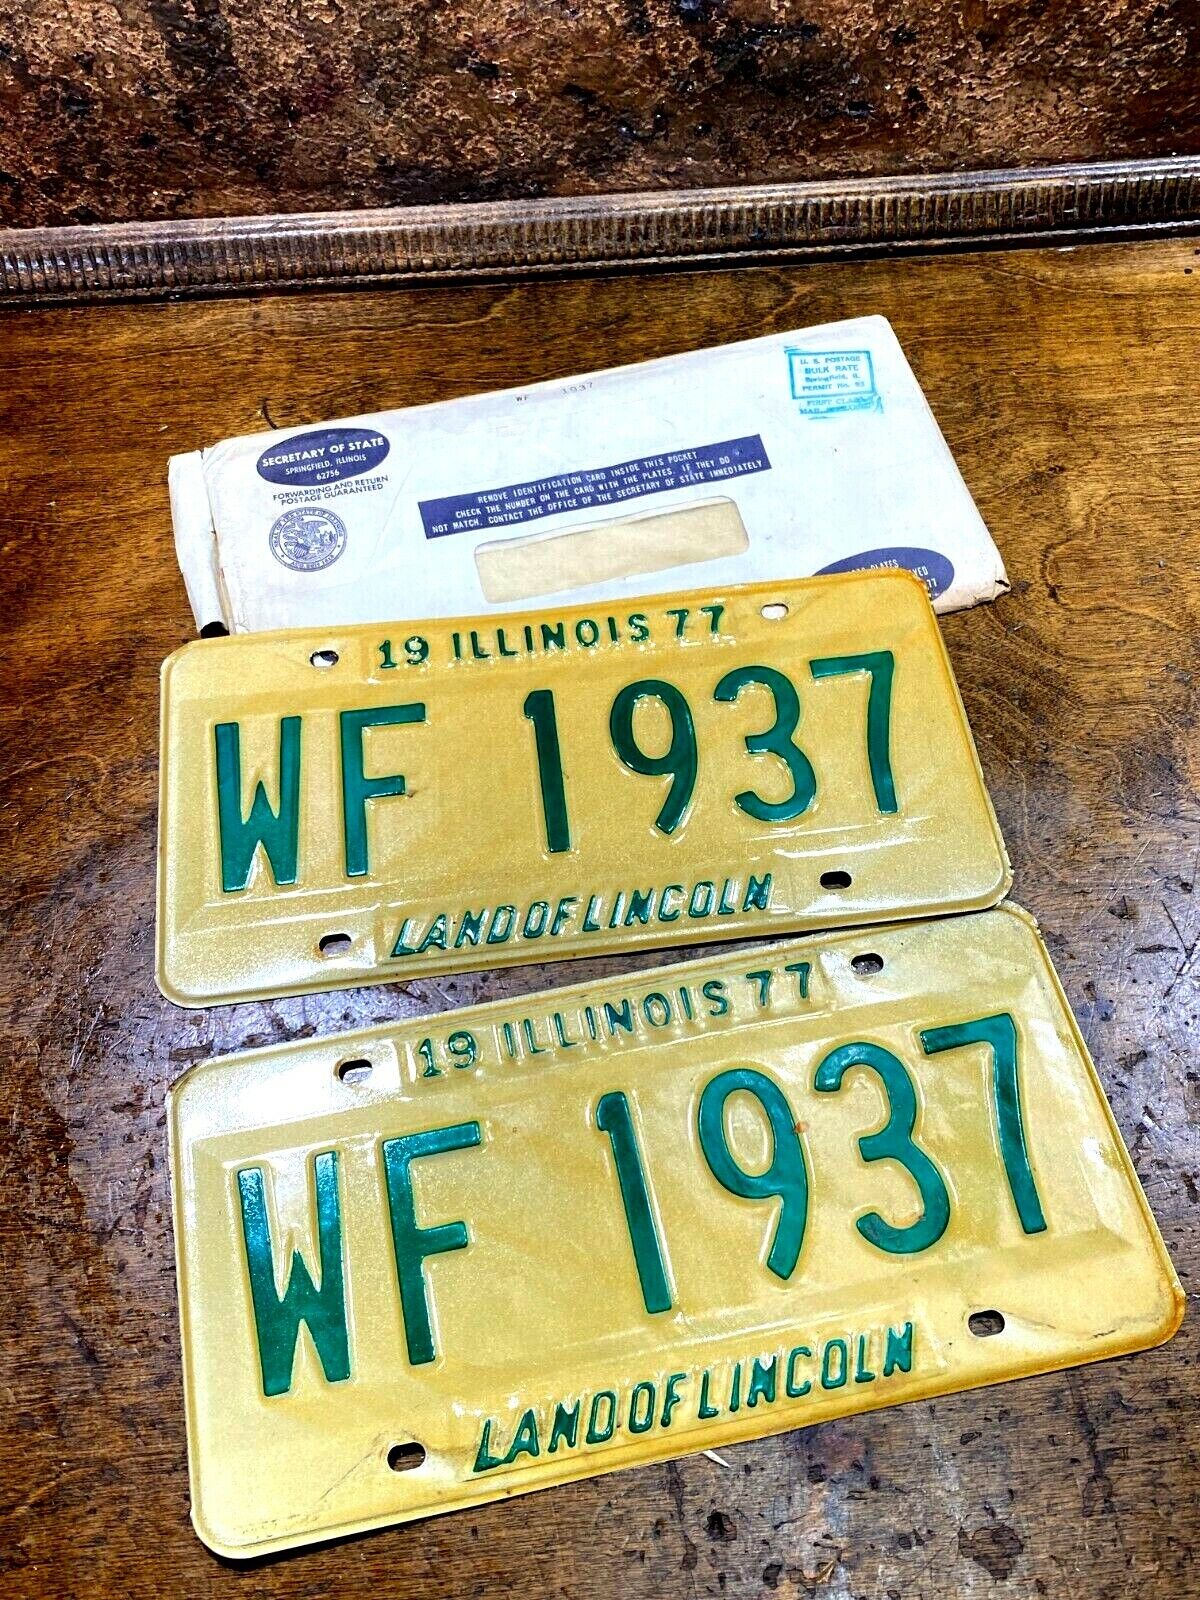 Original Match Pair of 1977 Illinois Car License Plate WF 1937  Automobile Tags